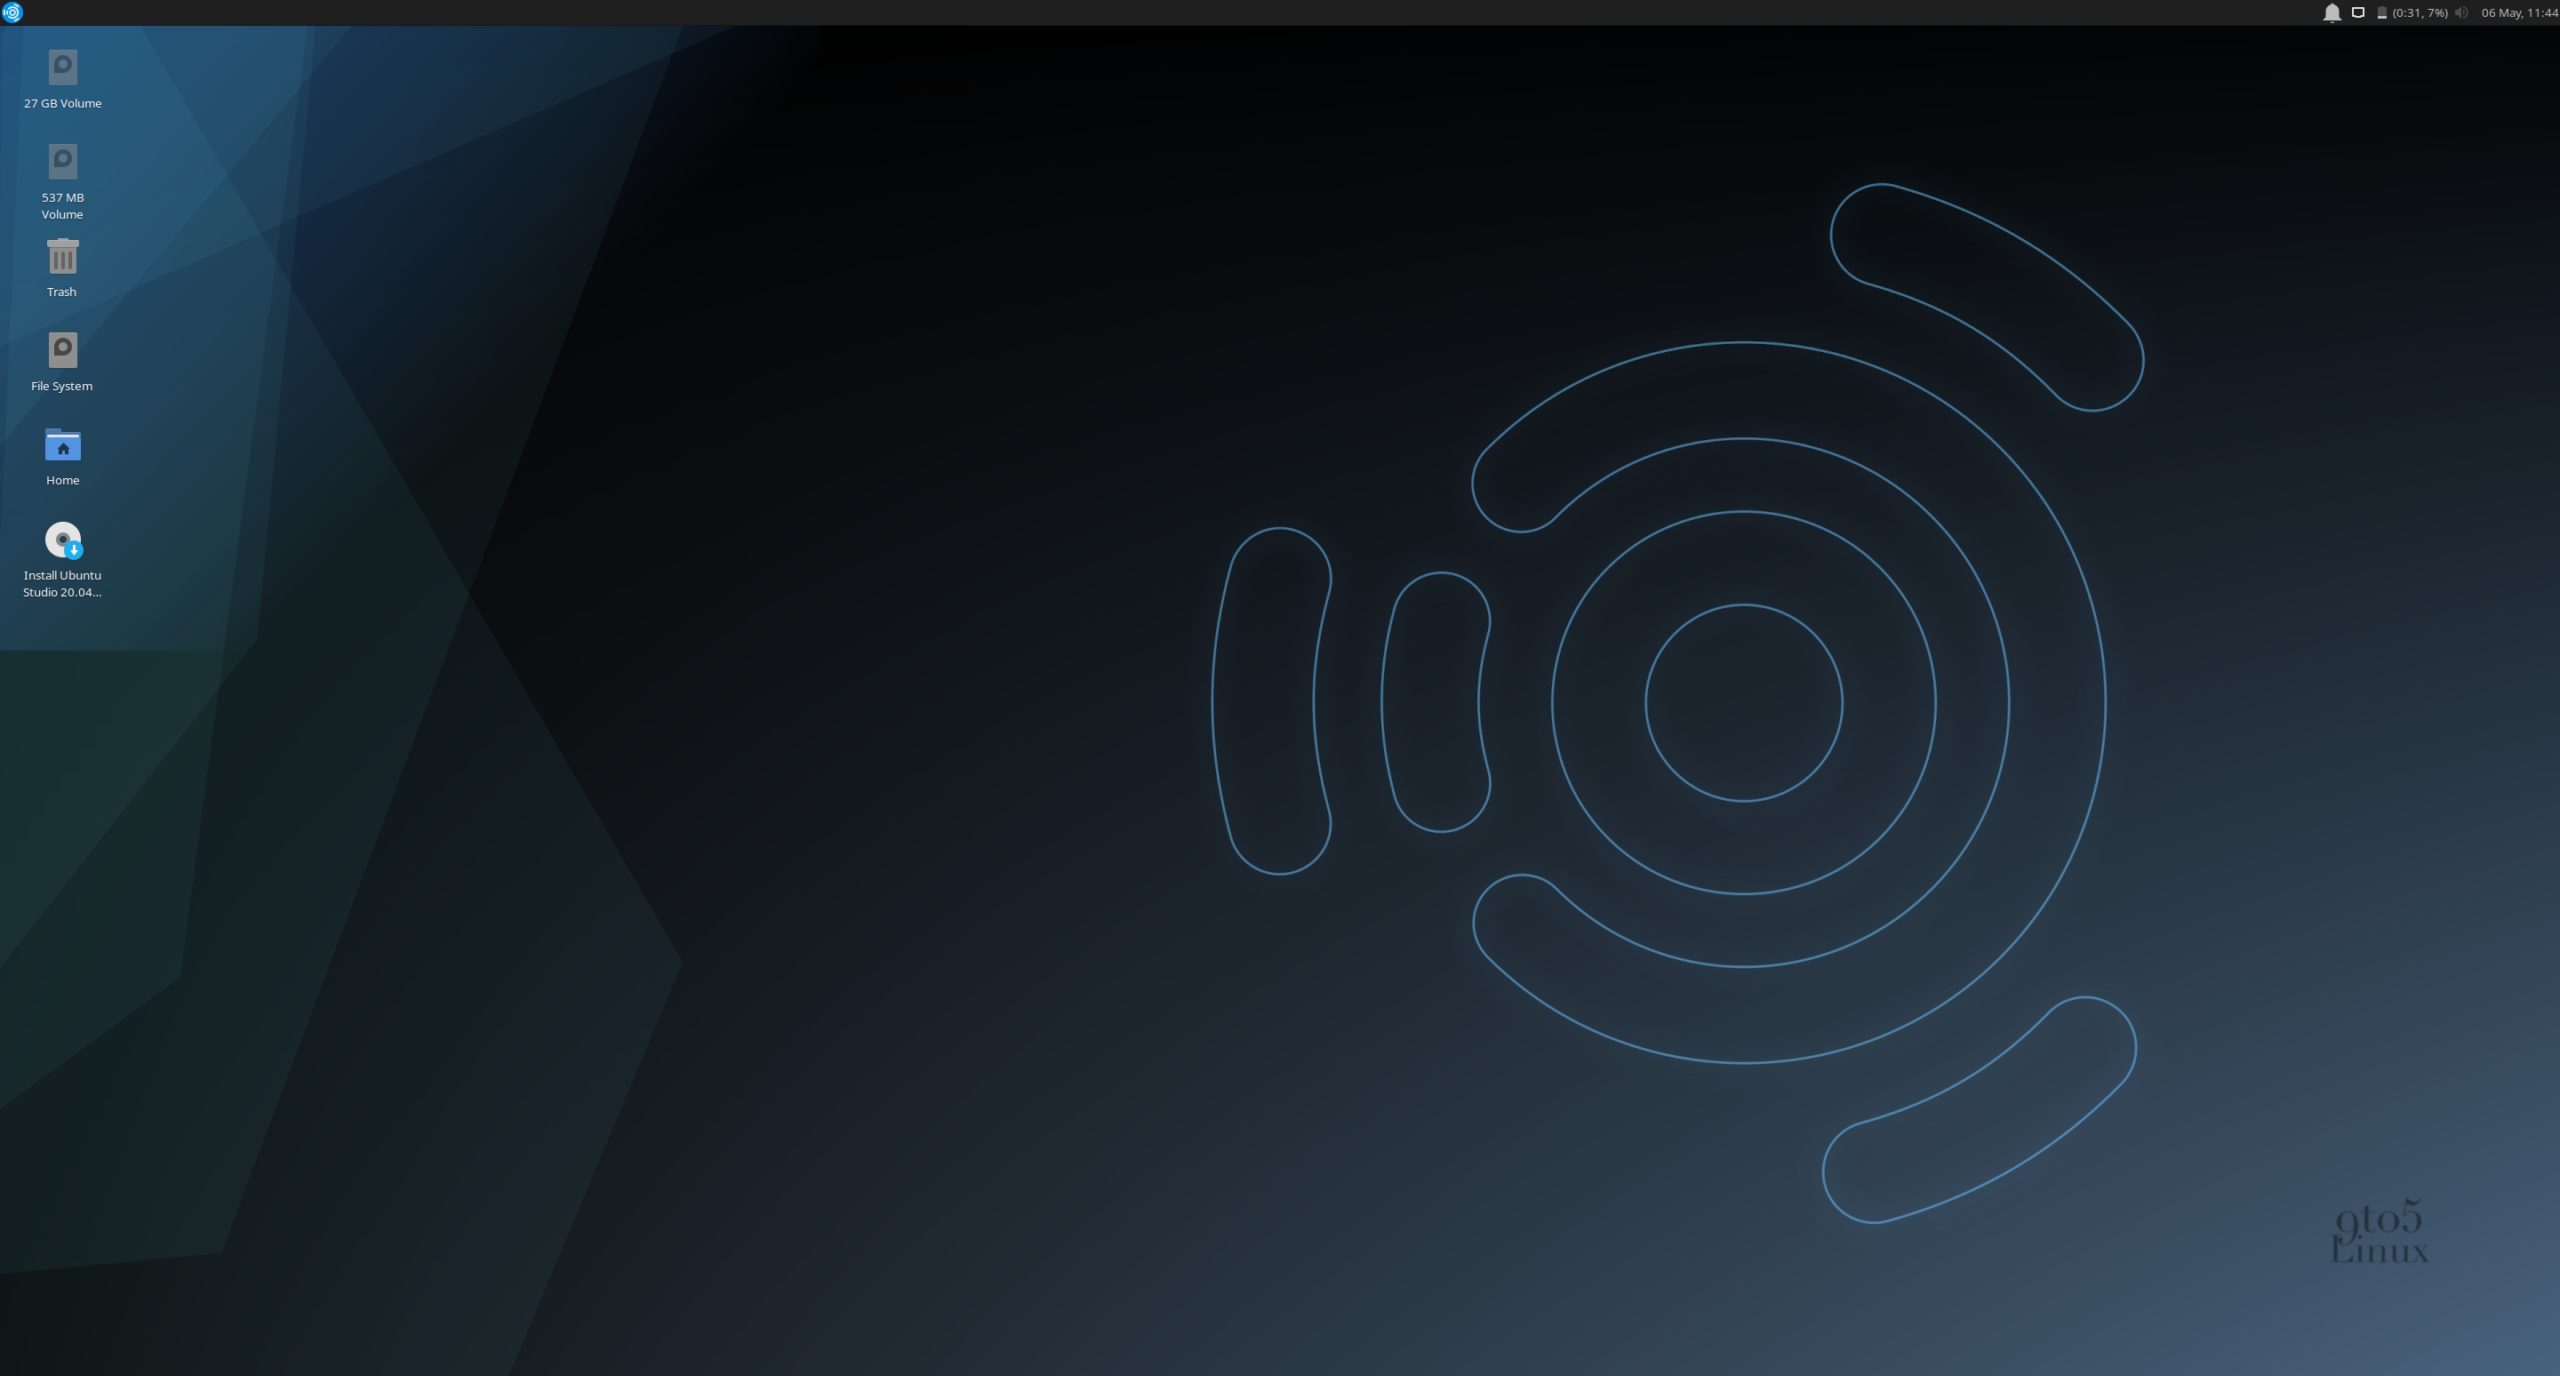 Ubuntu Studio 20.10 to Ditch the Xfce Desktop in Favor of KDE Plasma